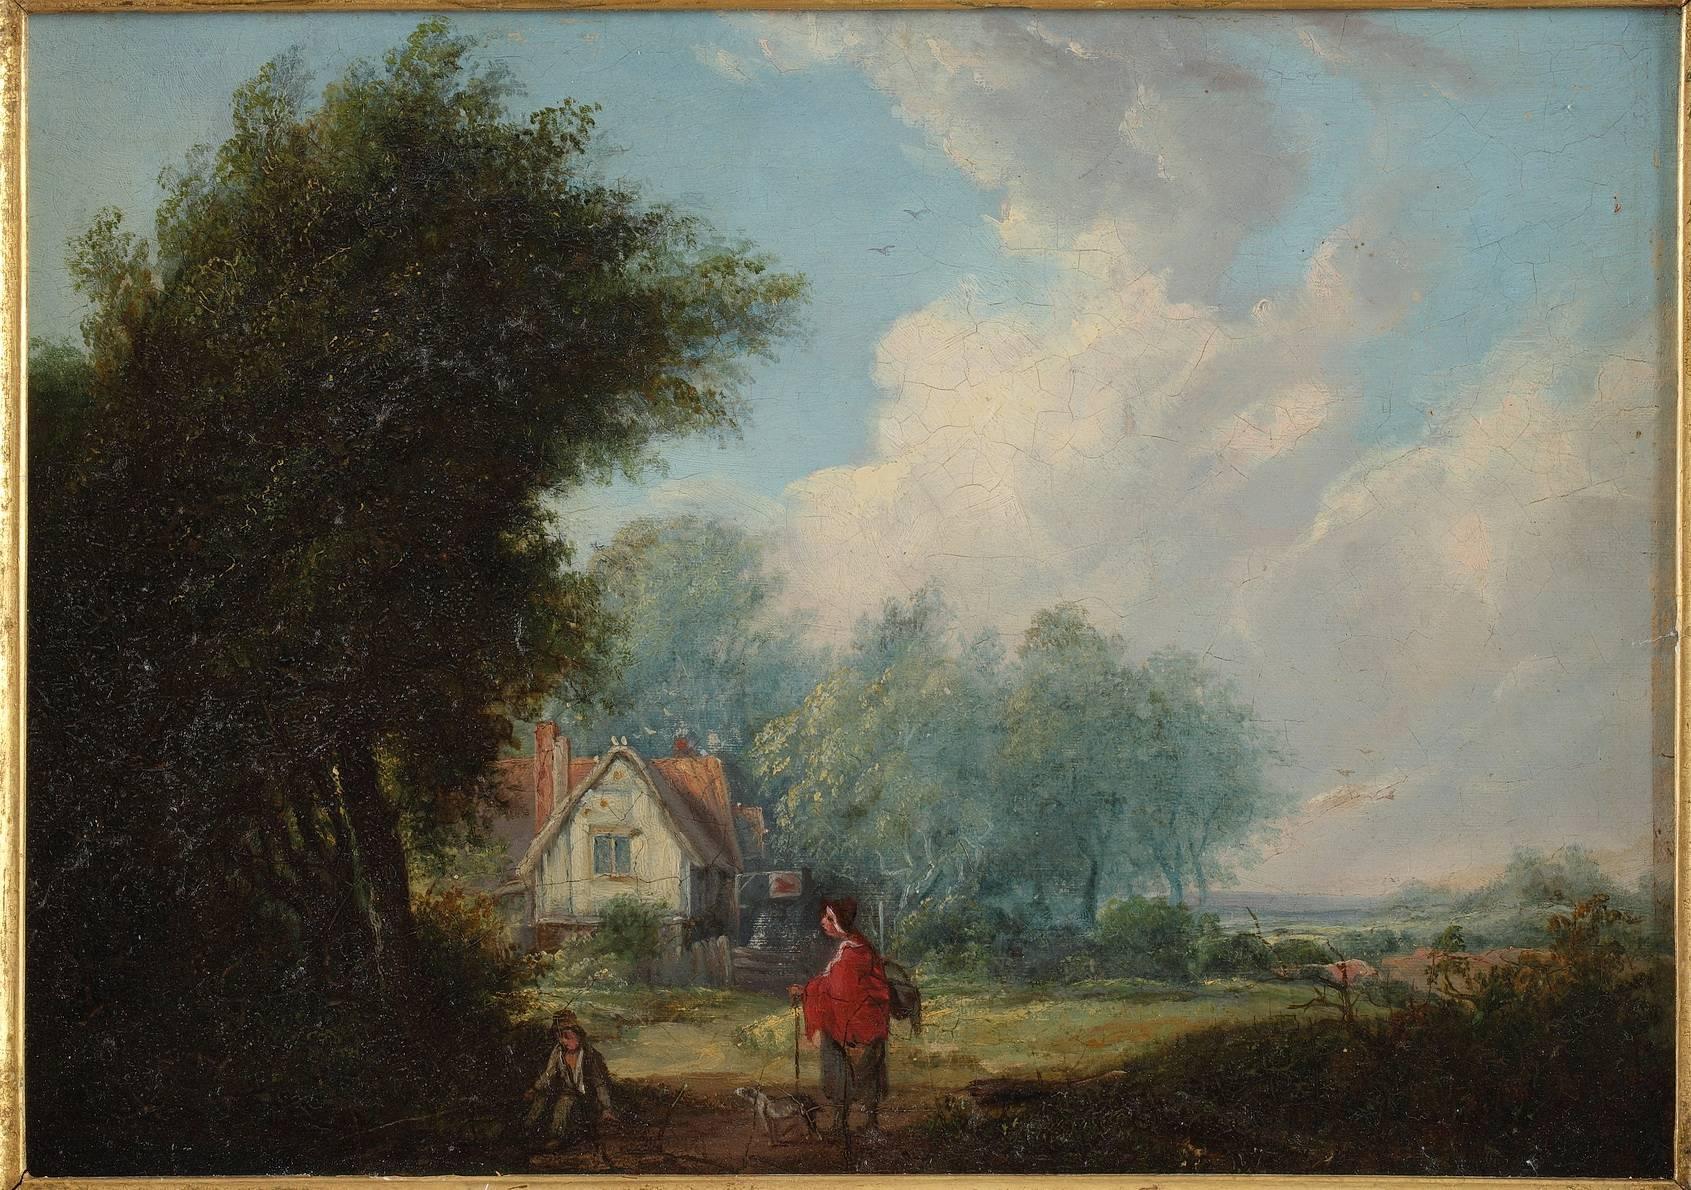 19th century landscapes